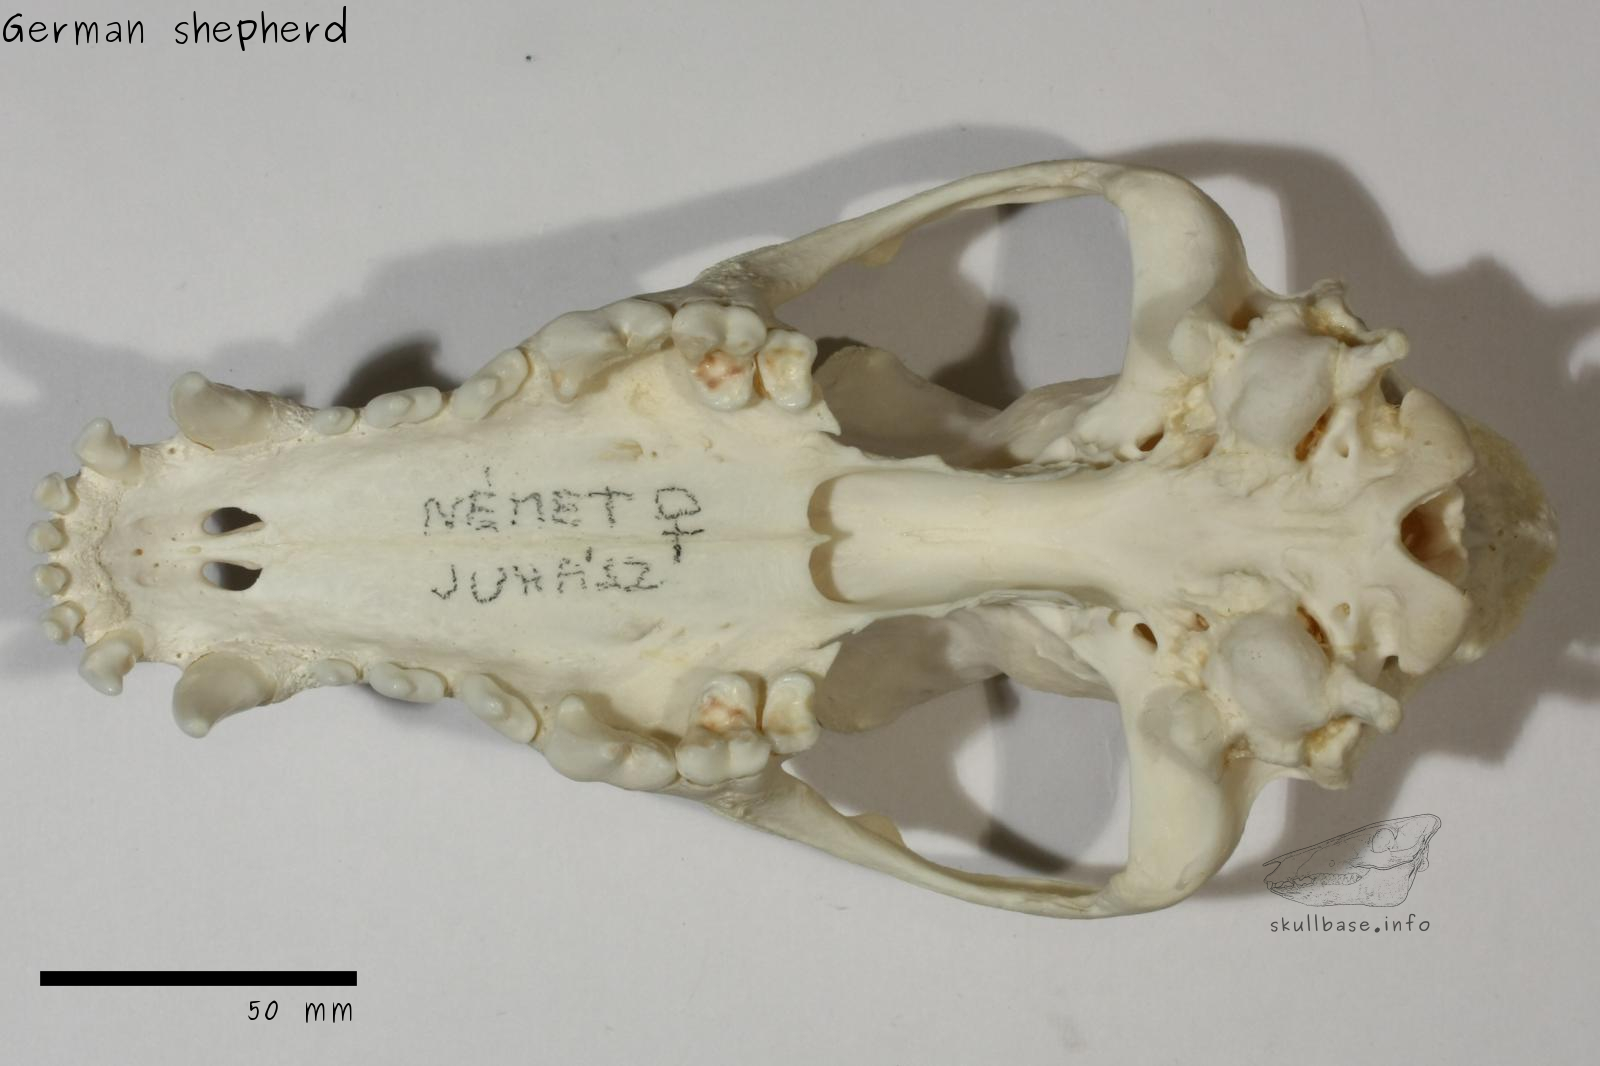 German shepherd (Canis lupus familiaris) skull ventral view